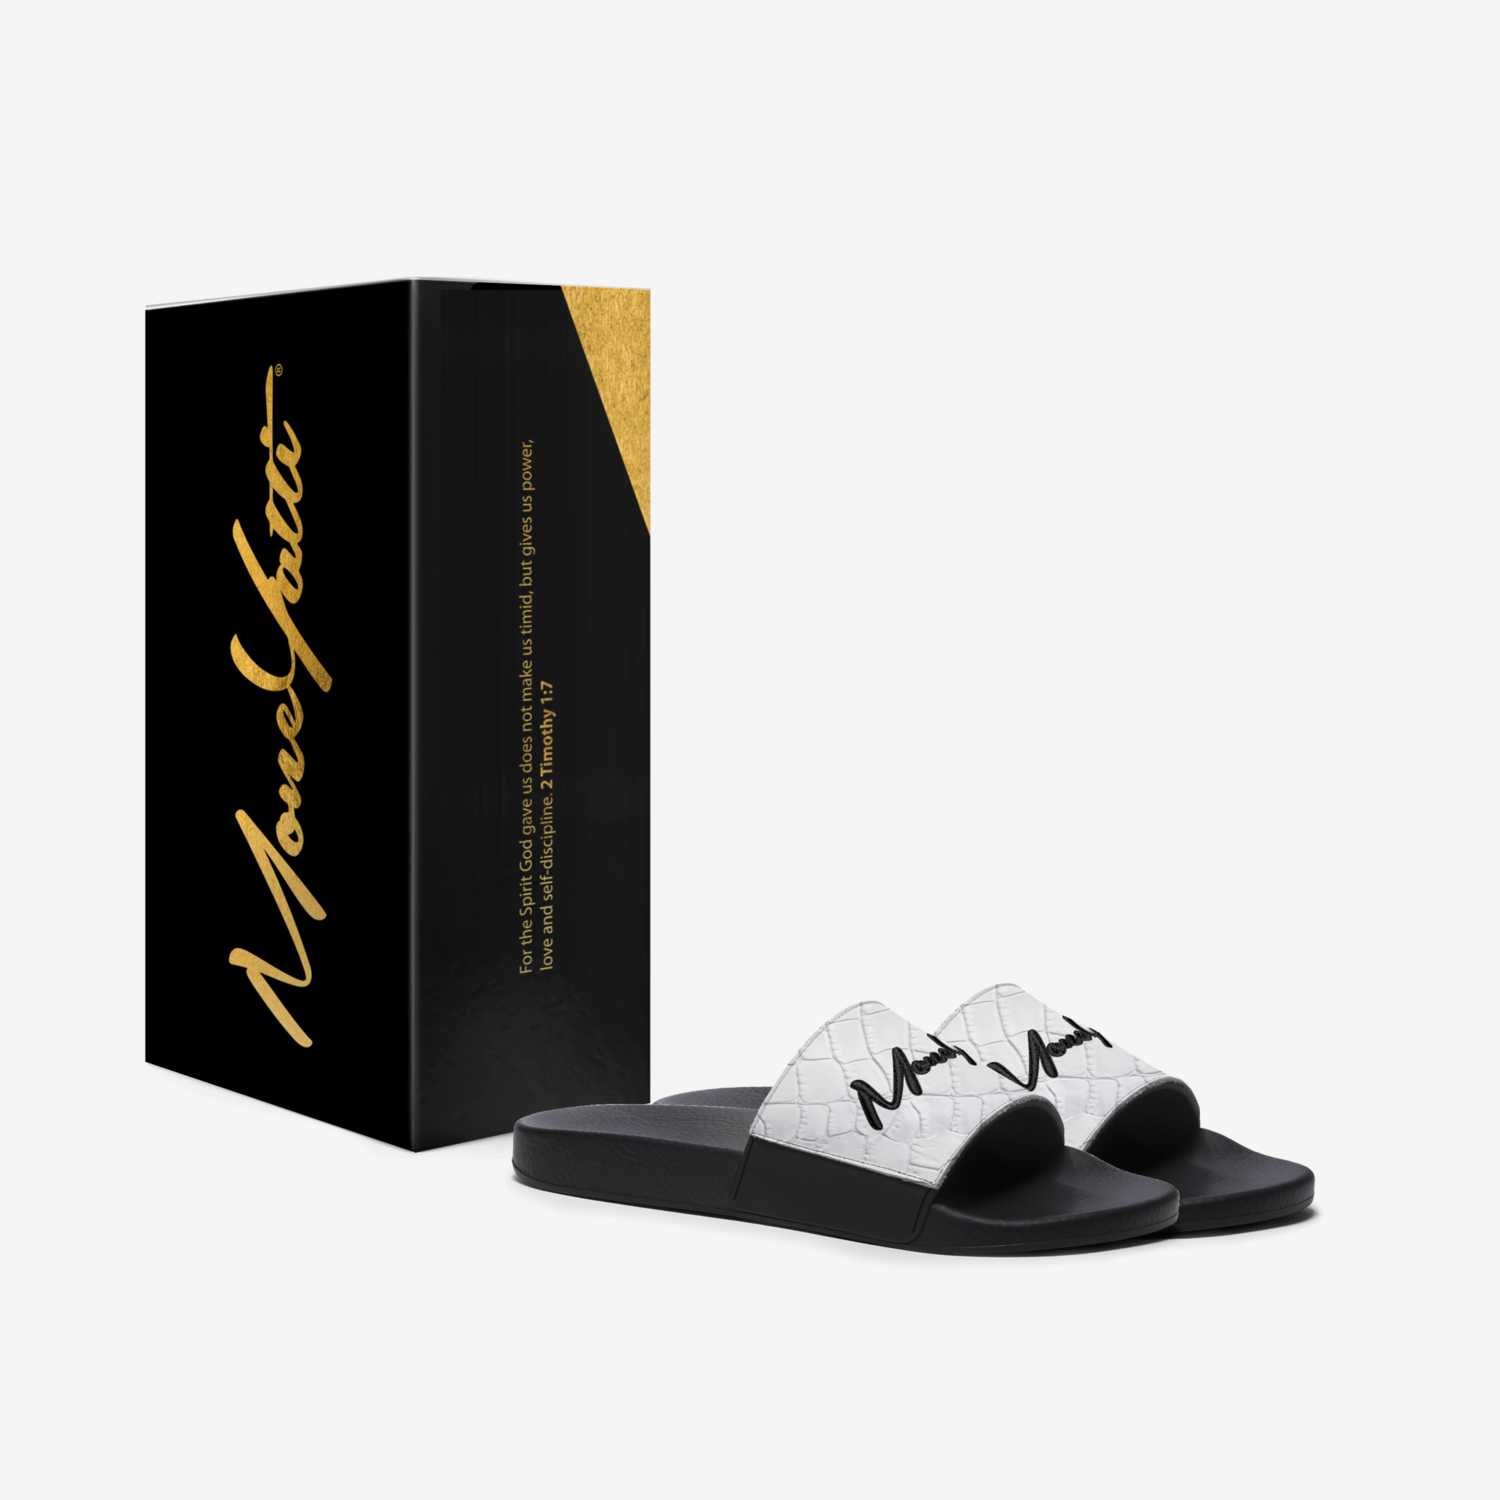 MONEYATTI SLIDES 012 custom made in Italy shoes by Moneyatti Brand | Box view